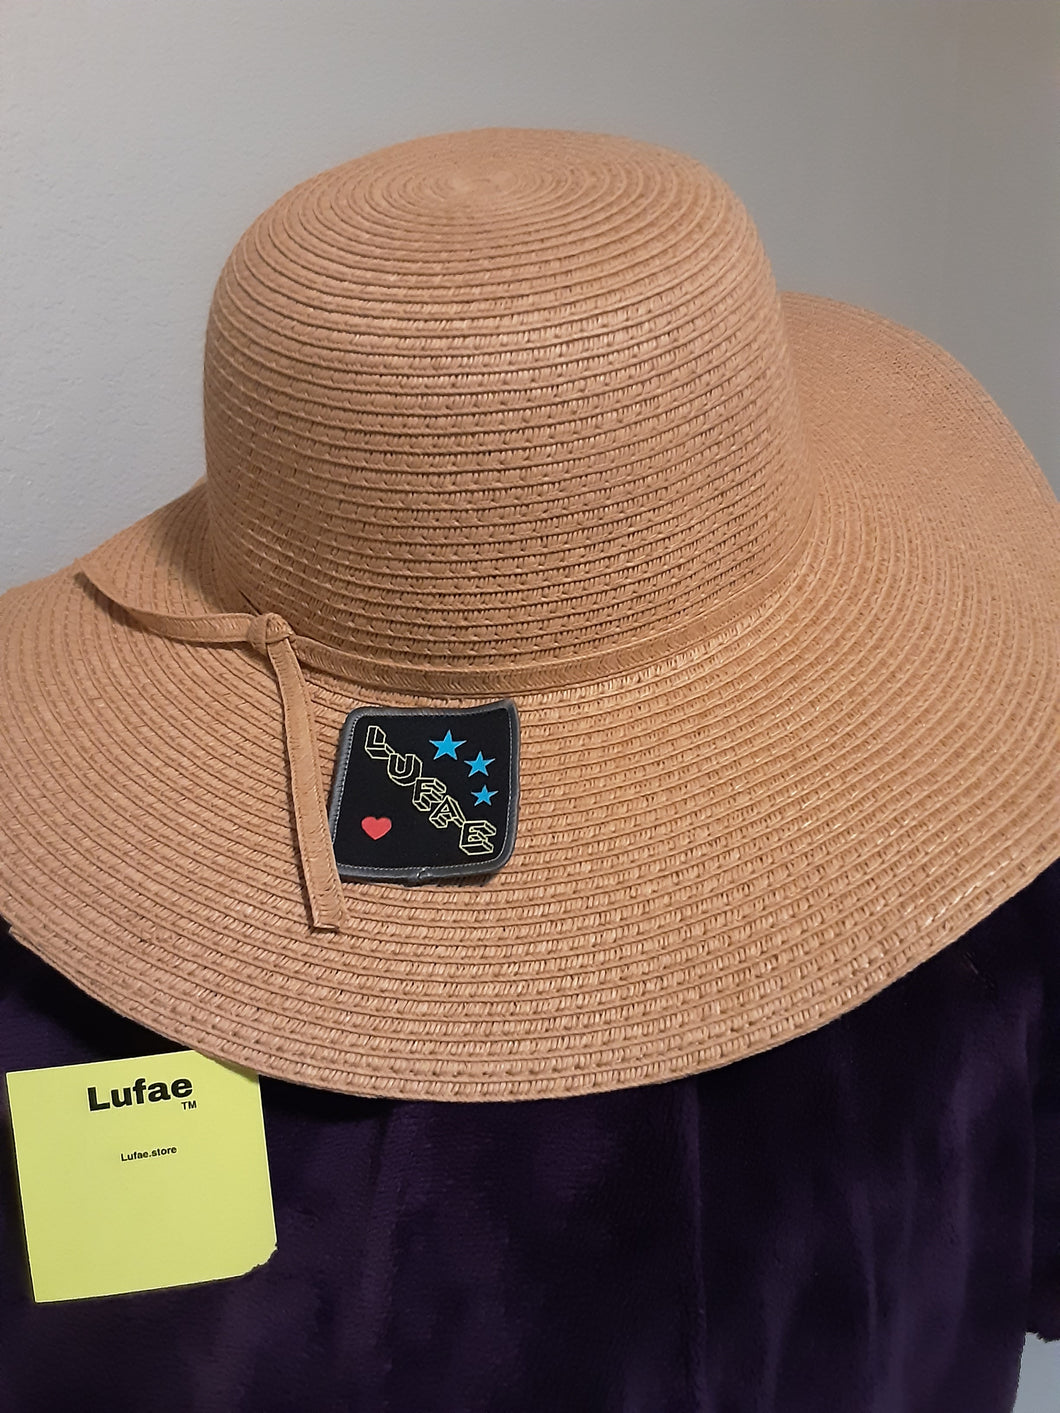 Floppy hat w/lufae patch